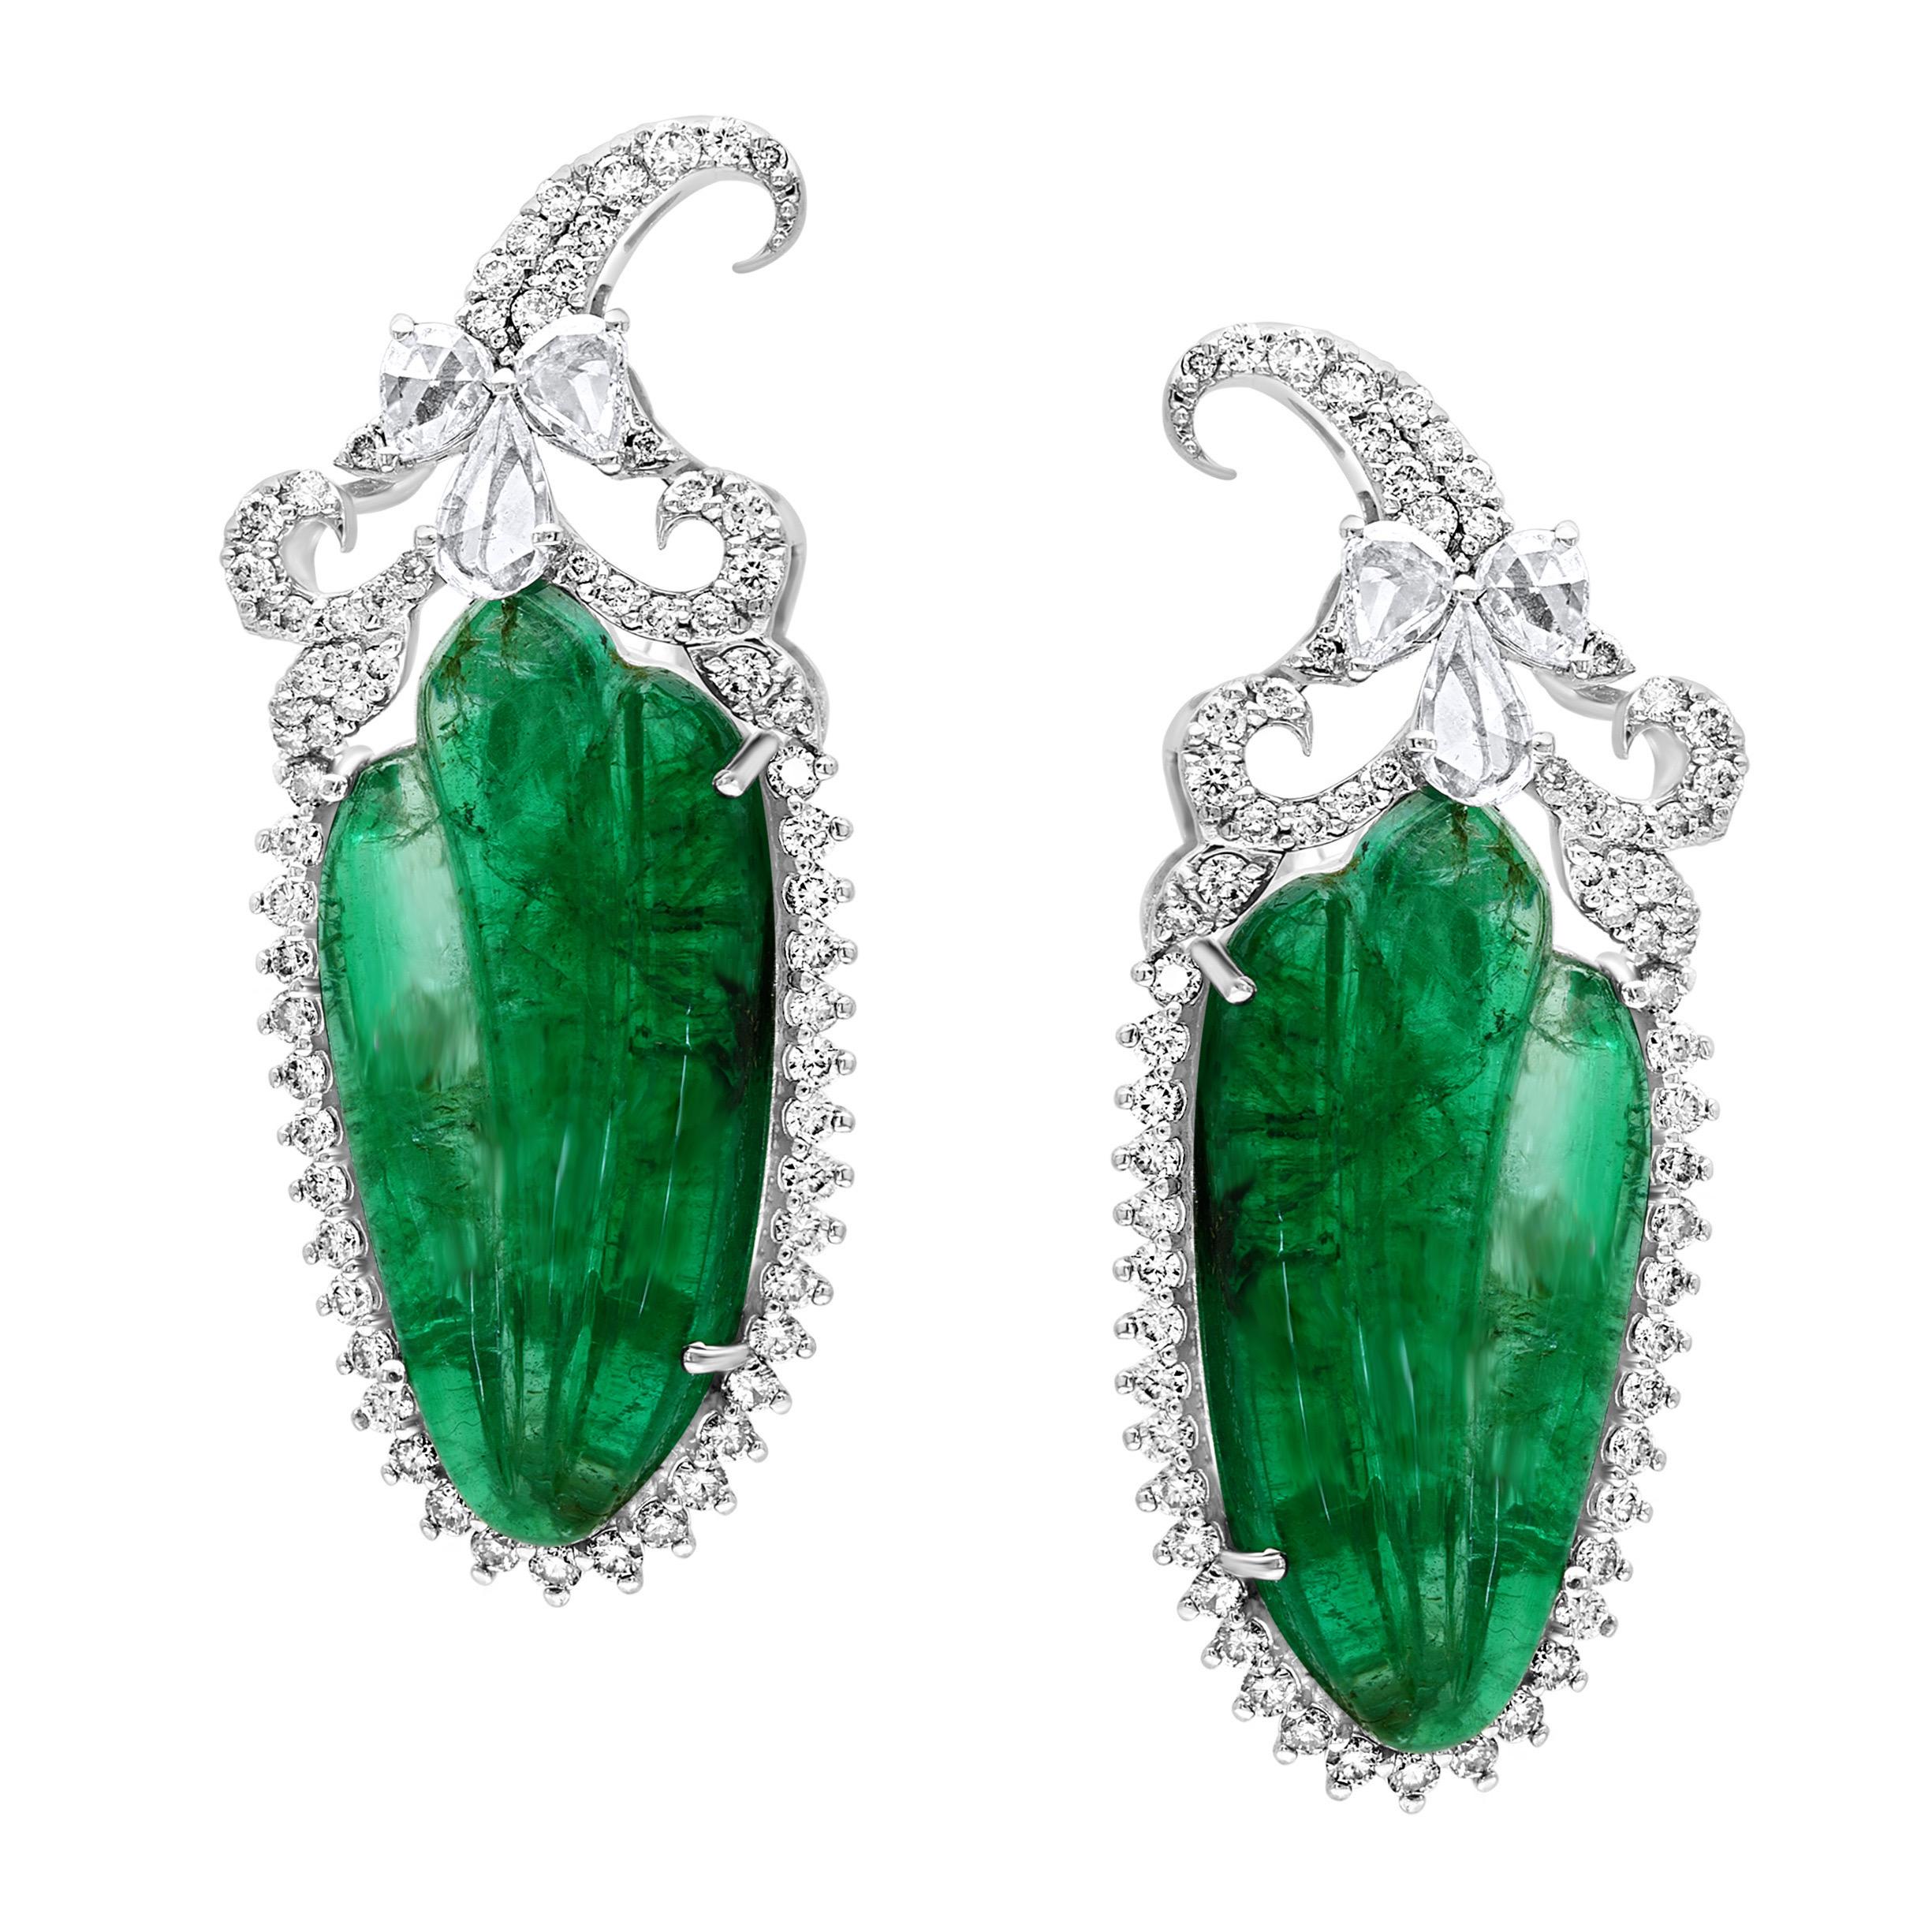 22 Ct Carved Emerald & 2 Ct Diamond Earrings 18 Karat White Gold Post Earrings For Sale